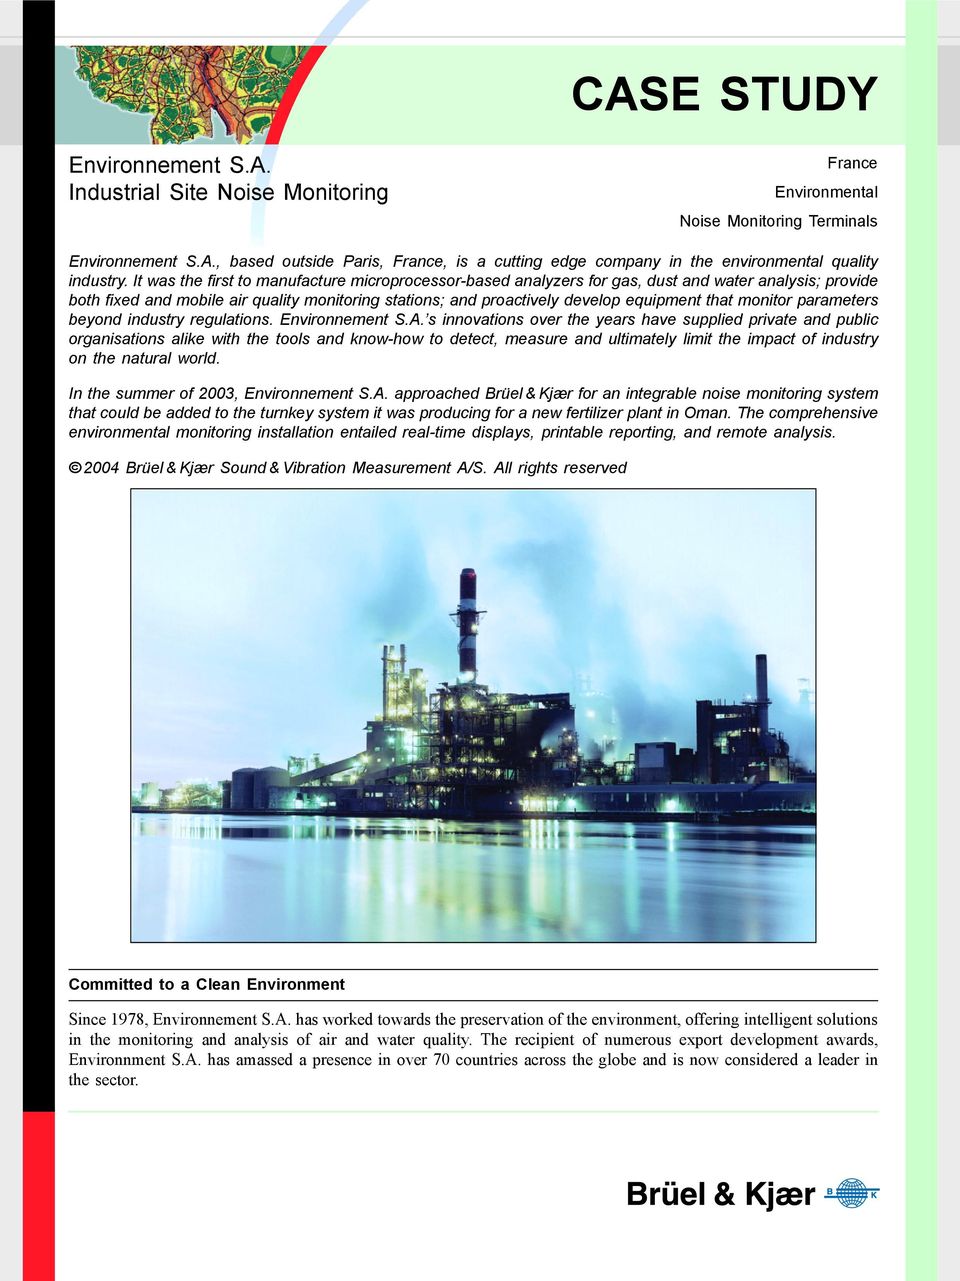 monitor parameters beyond industry regulations. Environnement S.A.